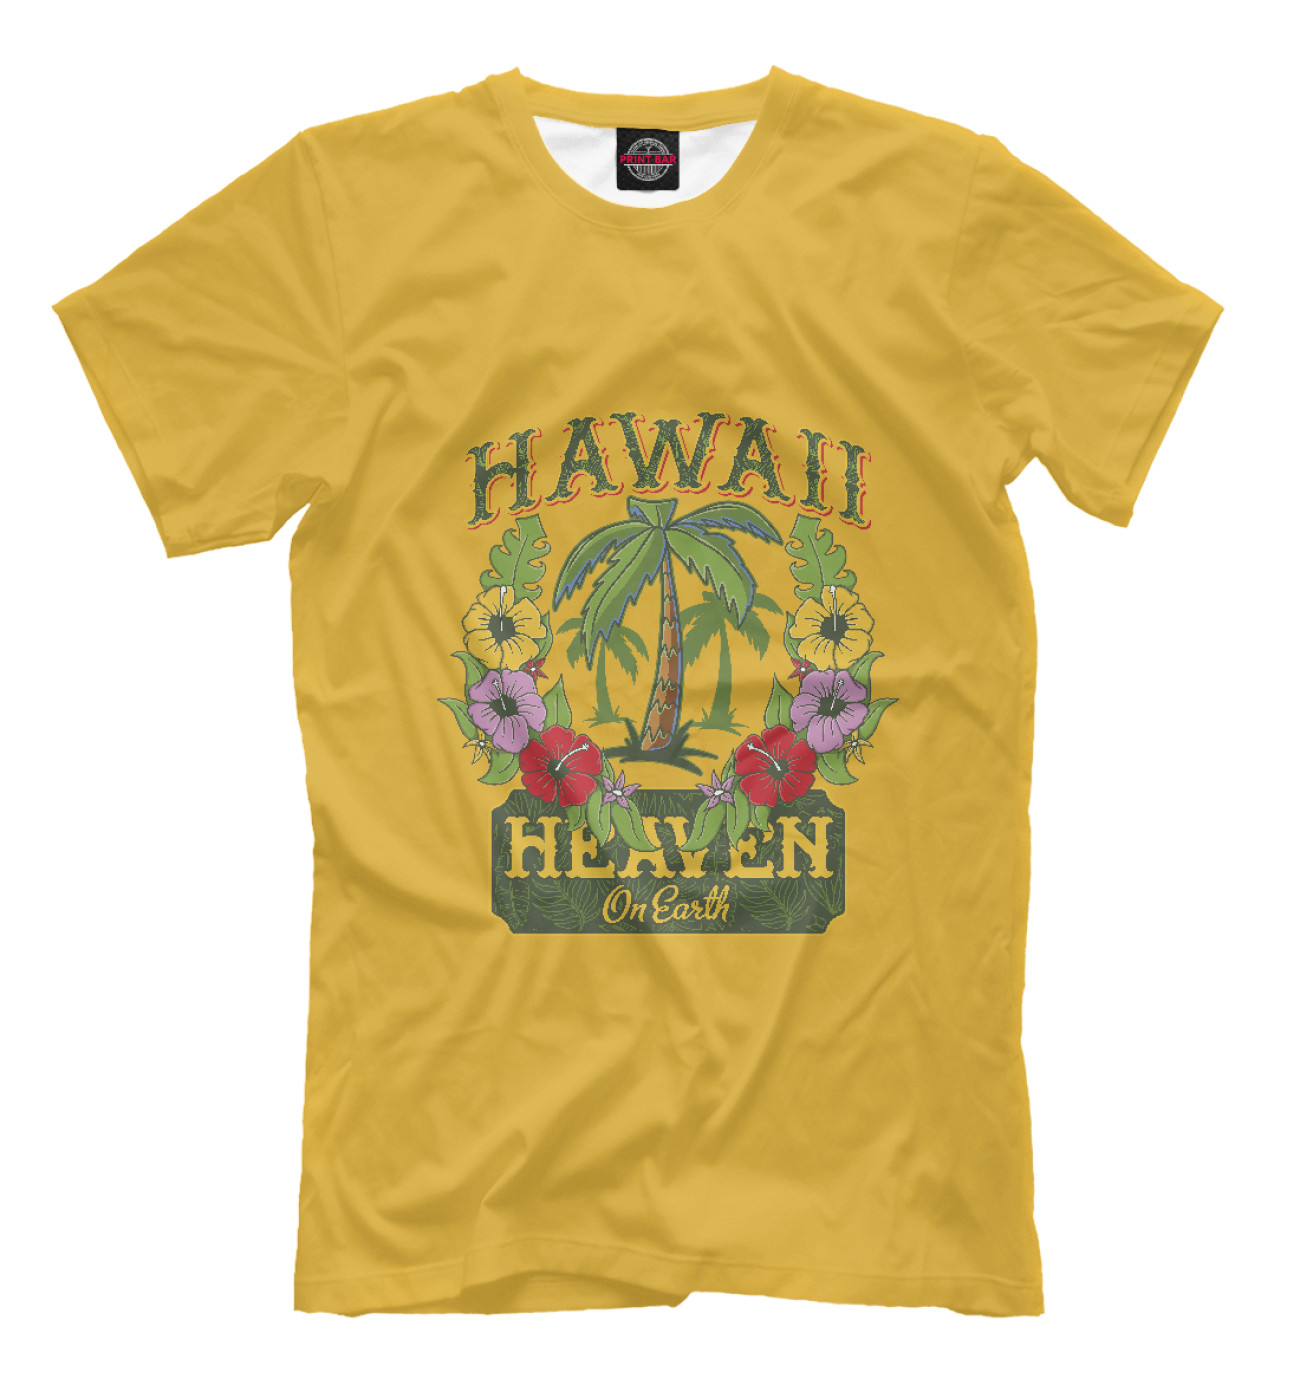 Мужская Футболка Hawaii - heaven on earth, артикул: TRL-468389-fut-2